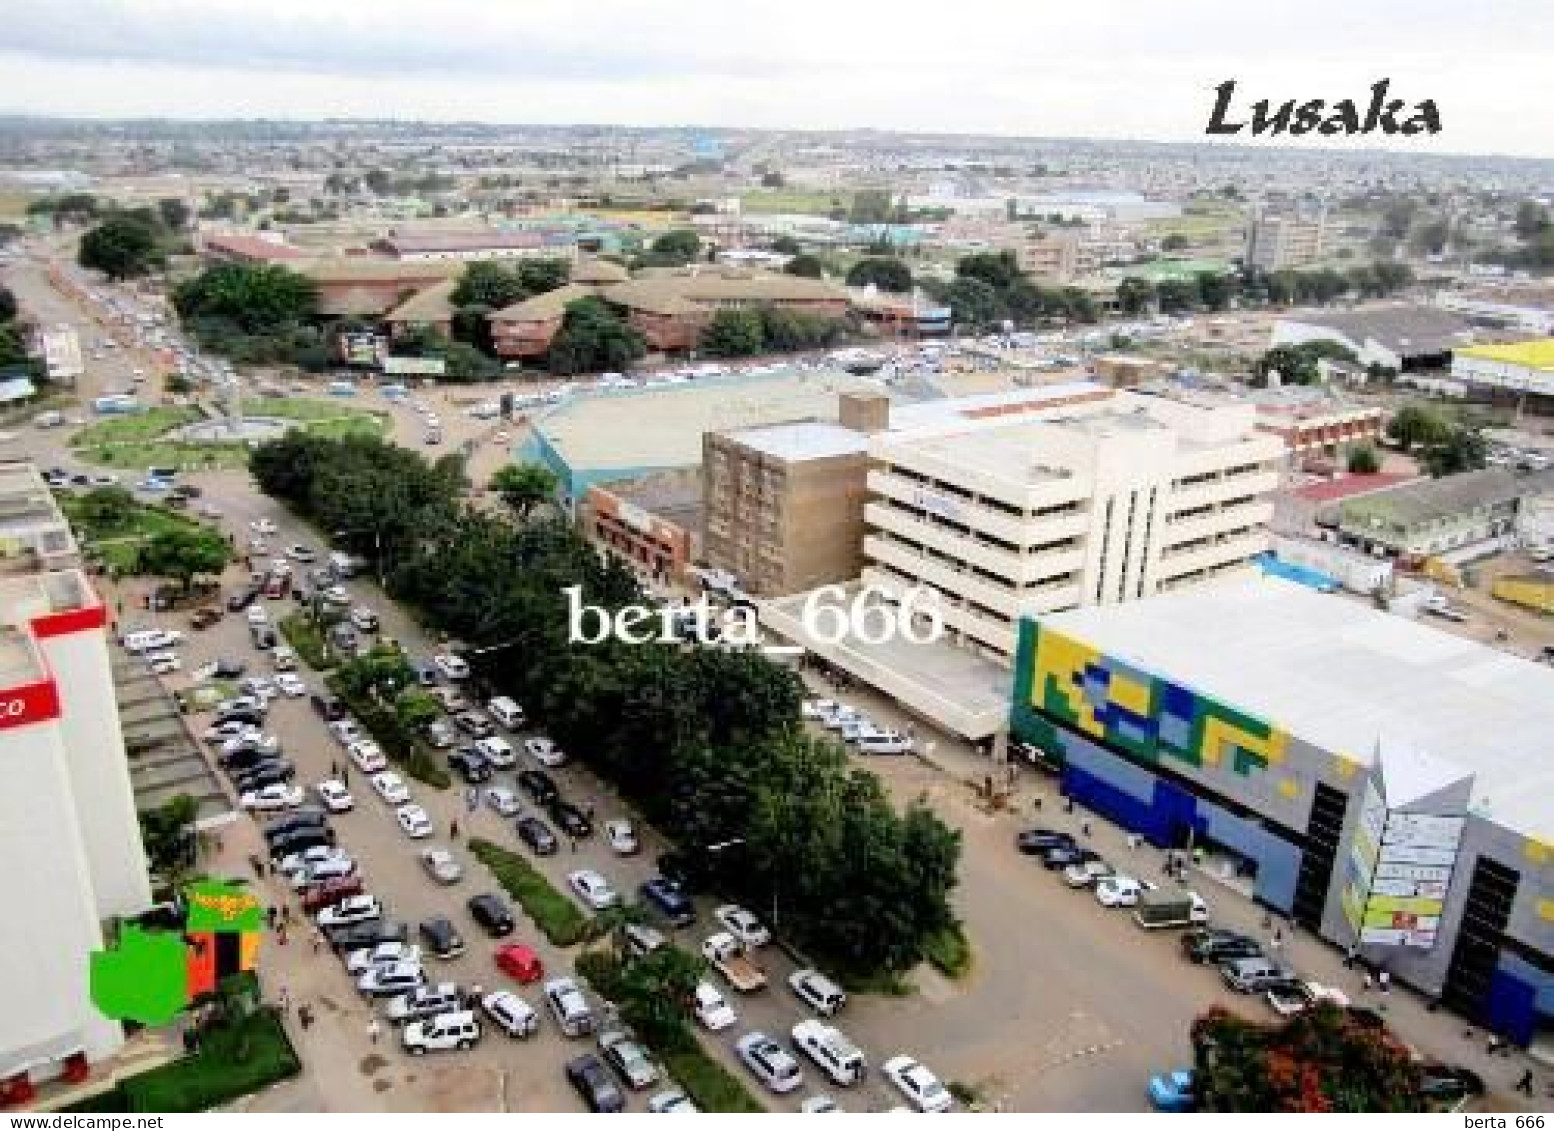 Zambia Lusaka Aerial View New Postcard - Sambia